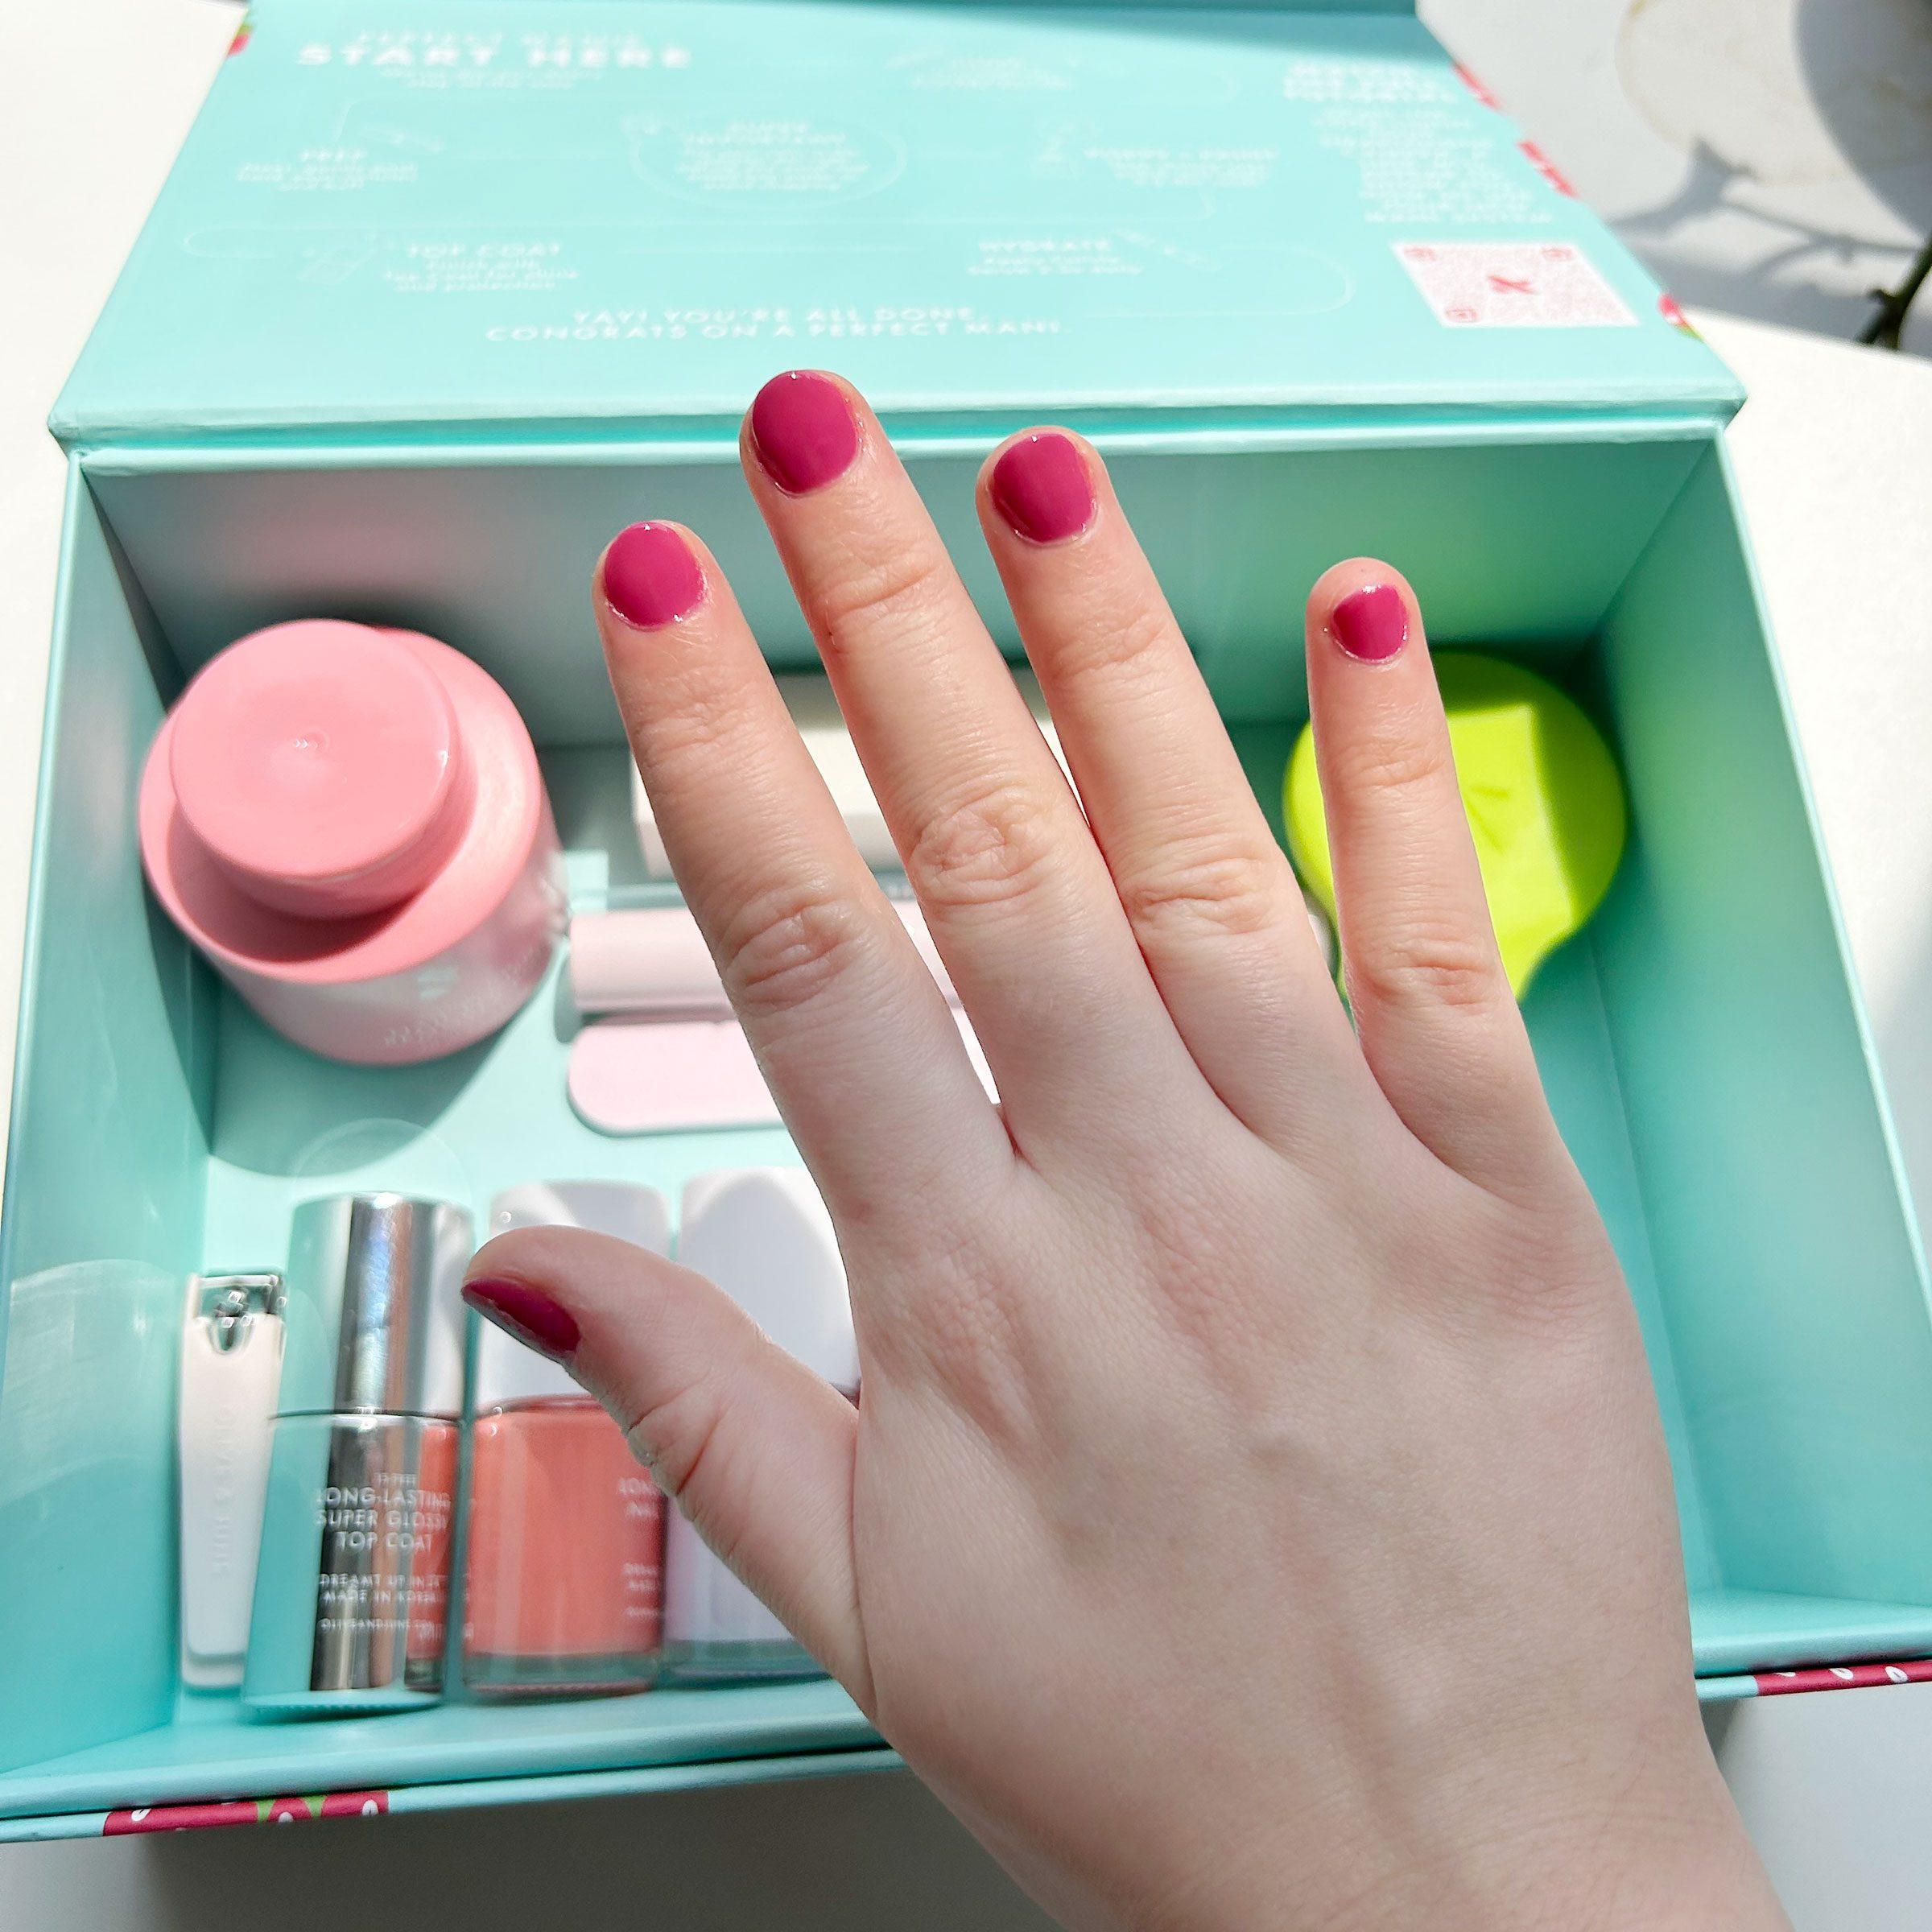 Le Mini Macaron Gel Manicure Set Review: I Got A Gorgeous Mani In Less Than  10 Minutes